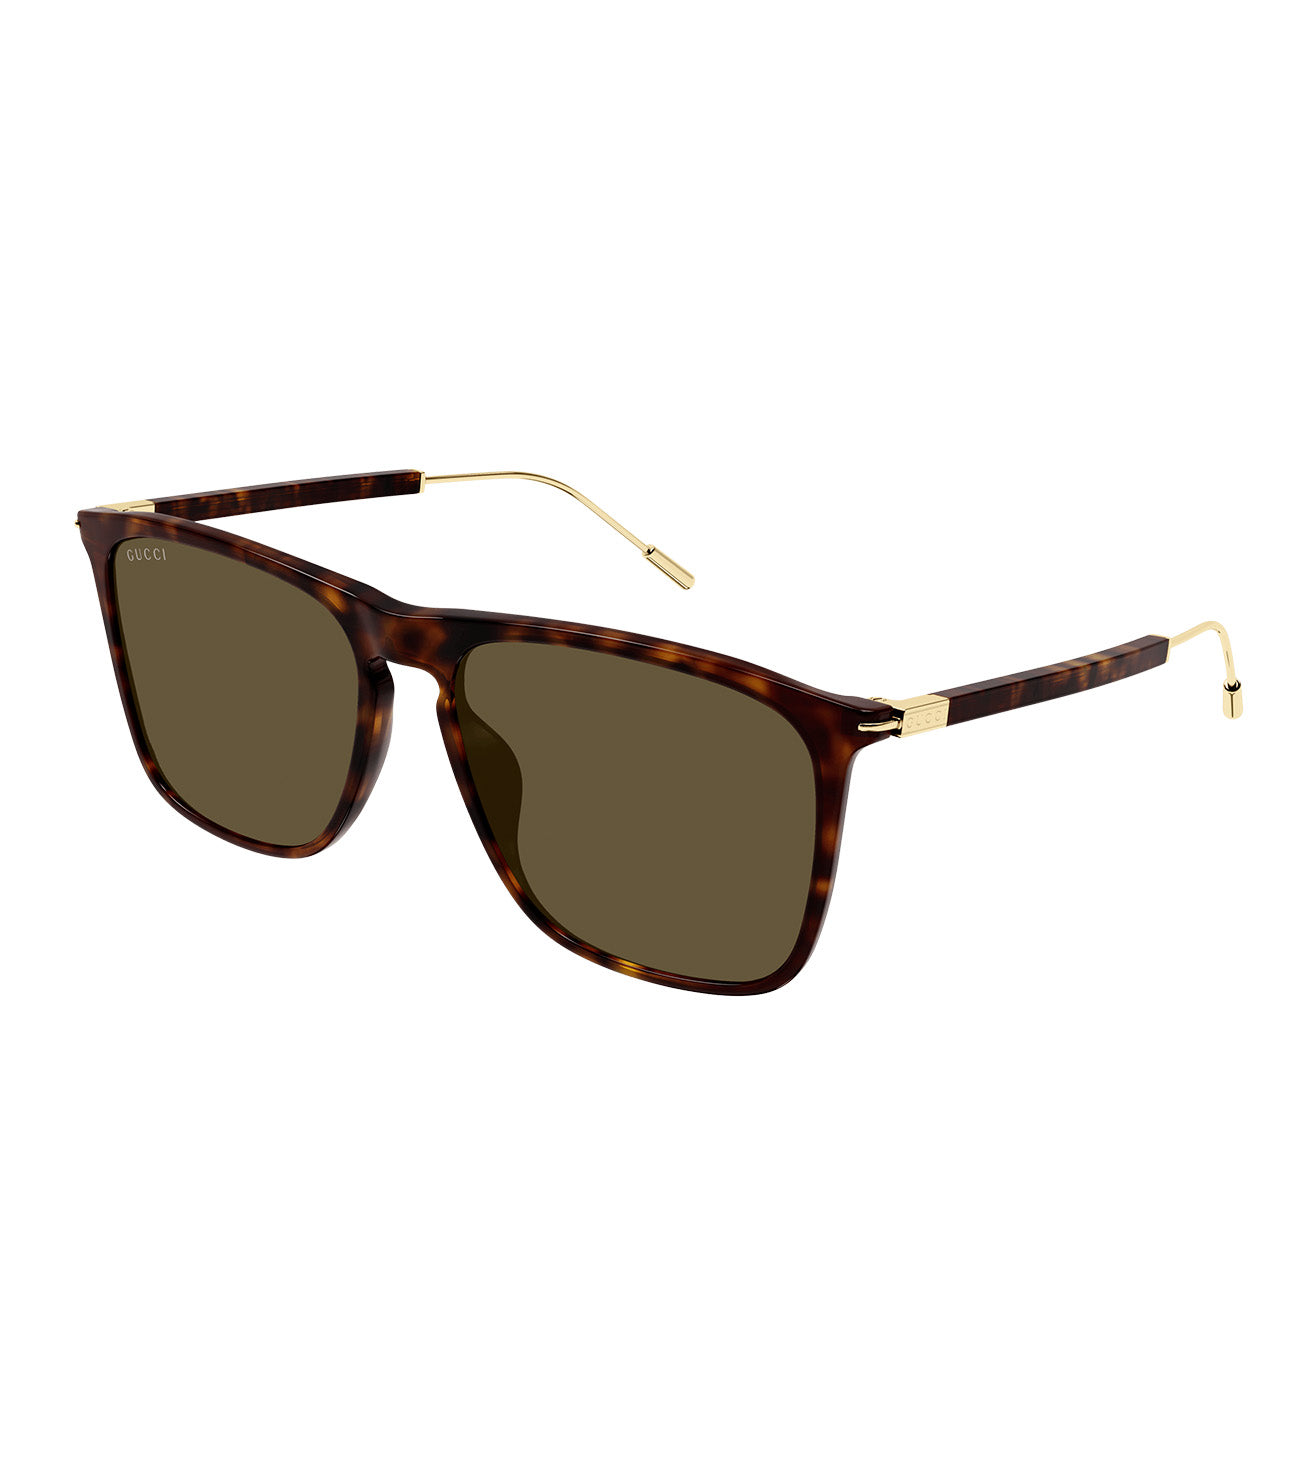 Gucci Men's Brown Wayfarer Sunglasses